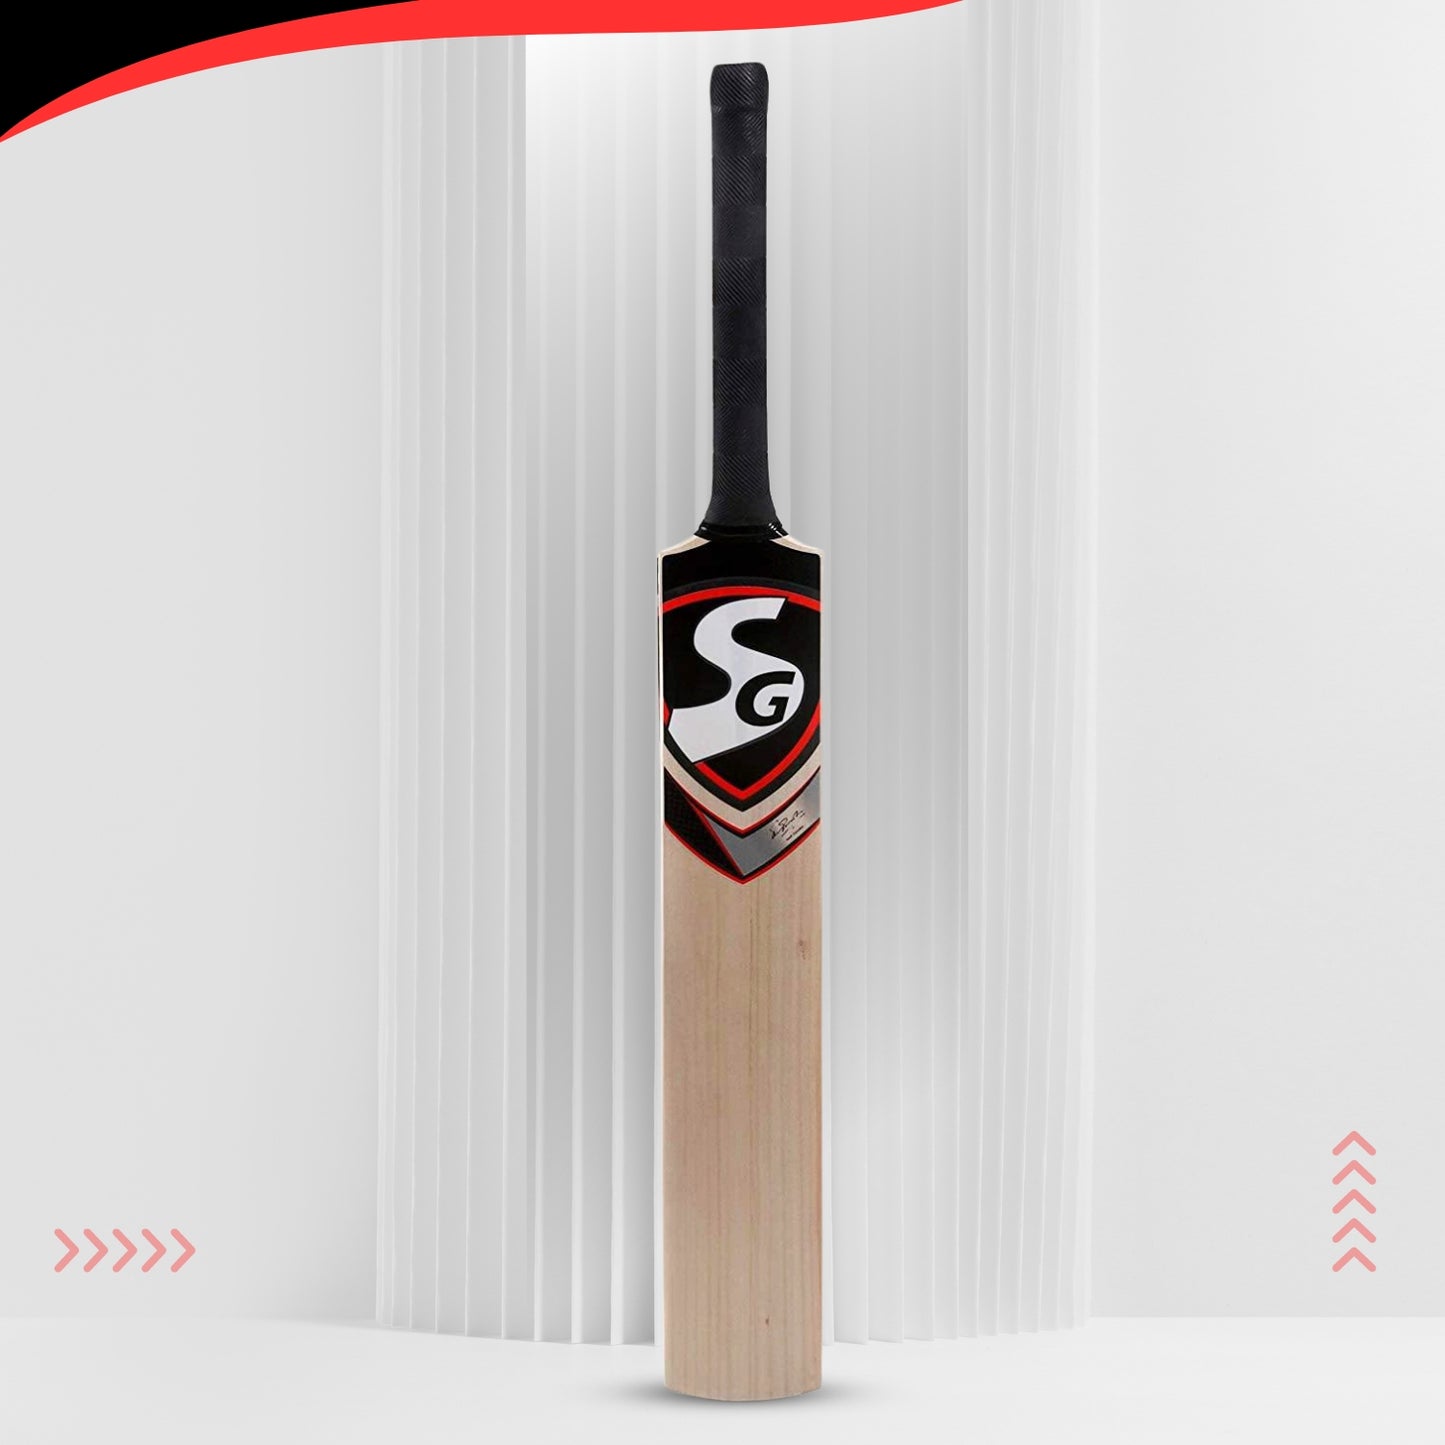 SG Cobra Gold Kashmir Willow Cricket Bat (Color May Vary) - Best Price online Prokicksports.com